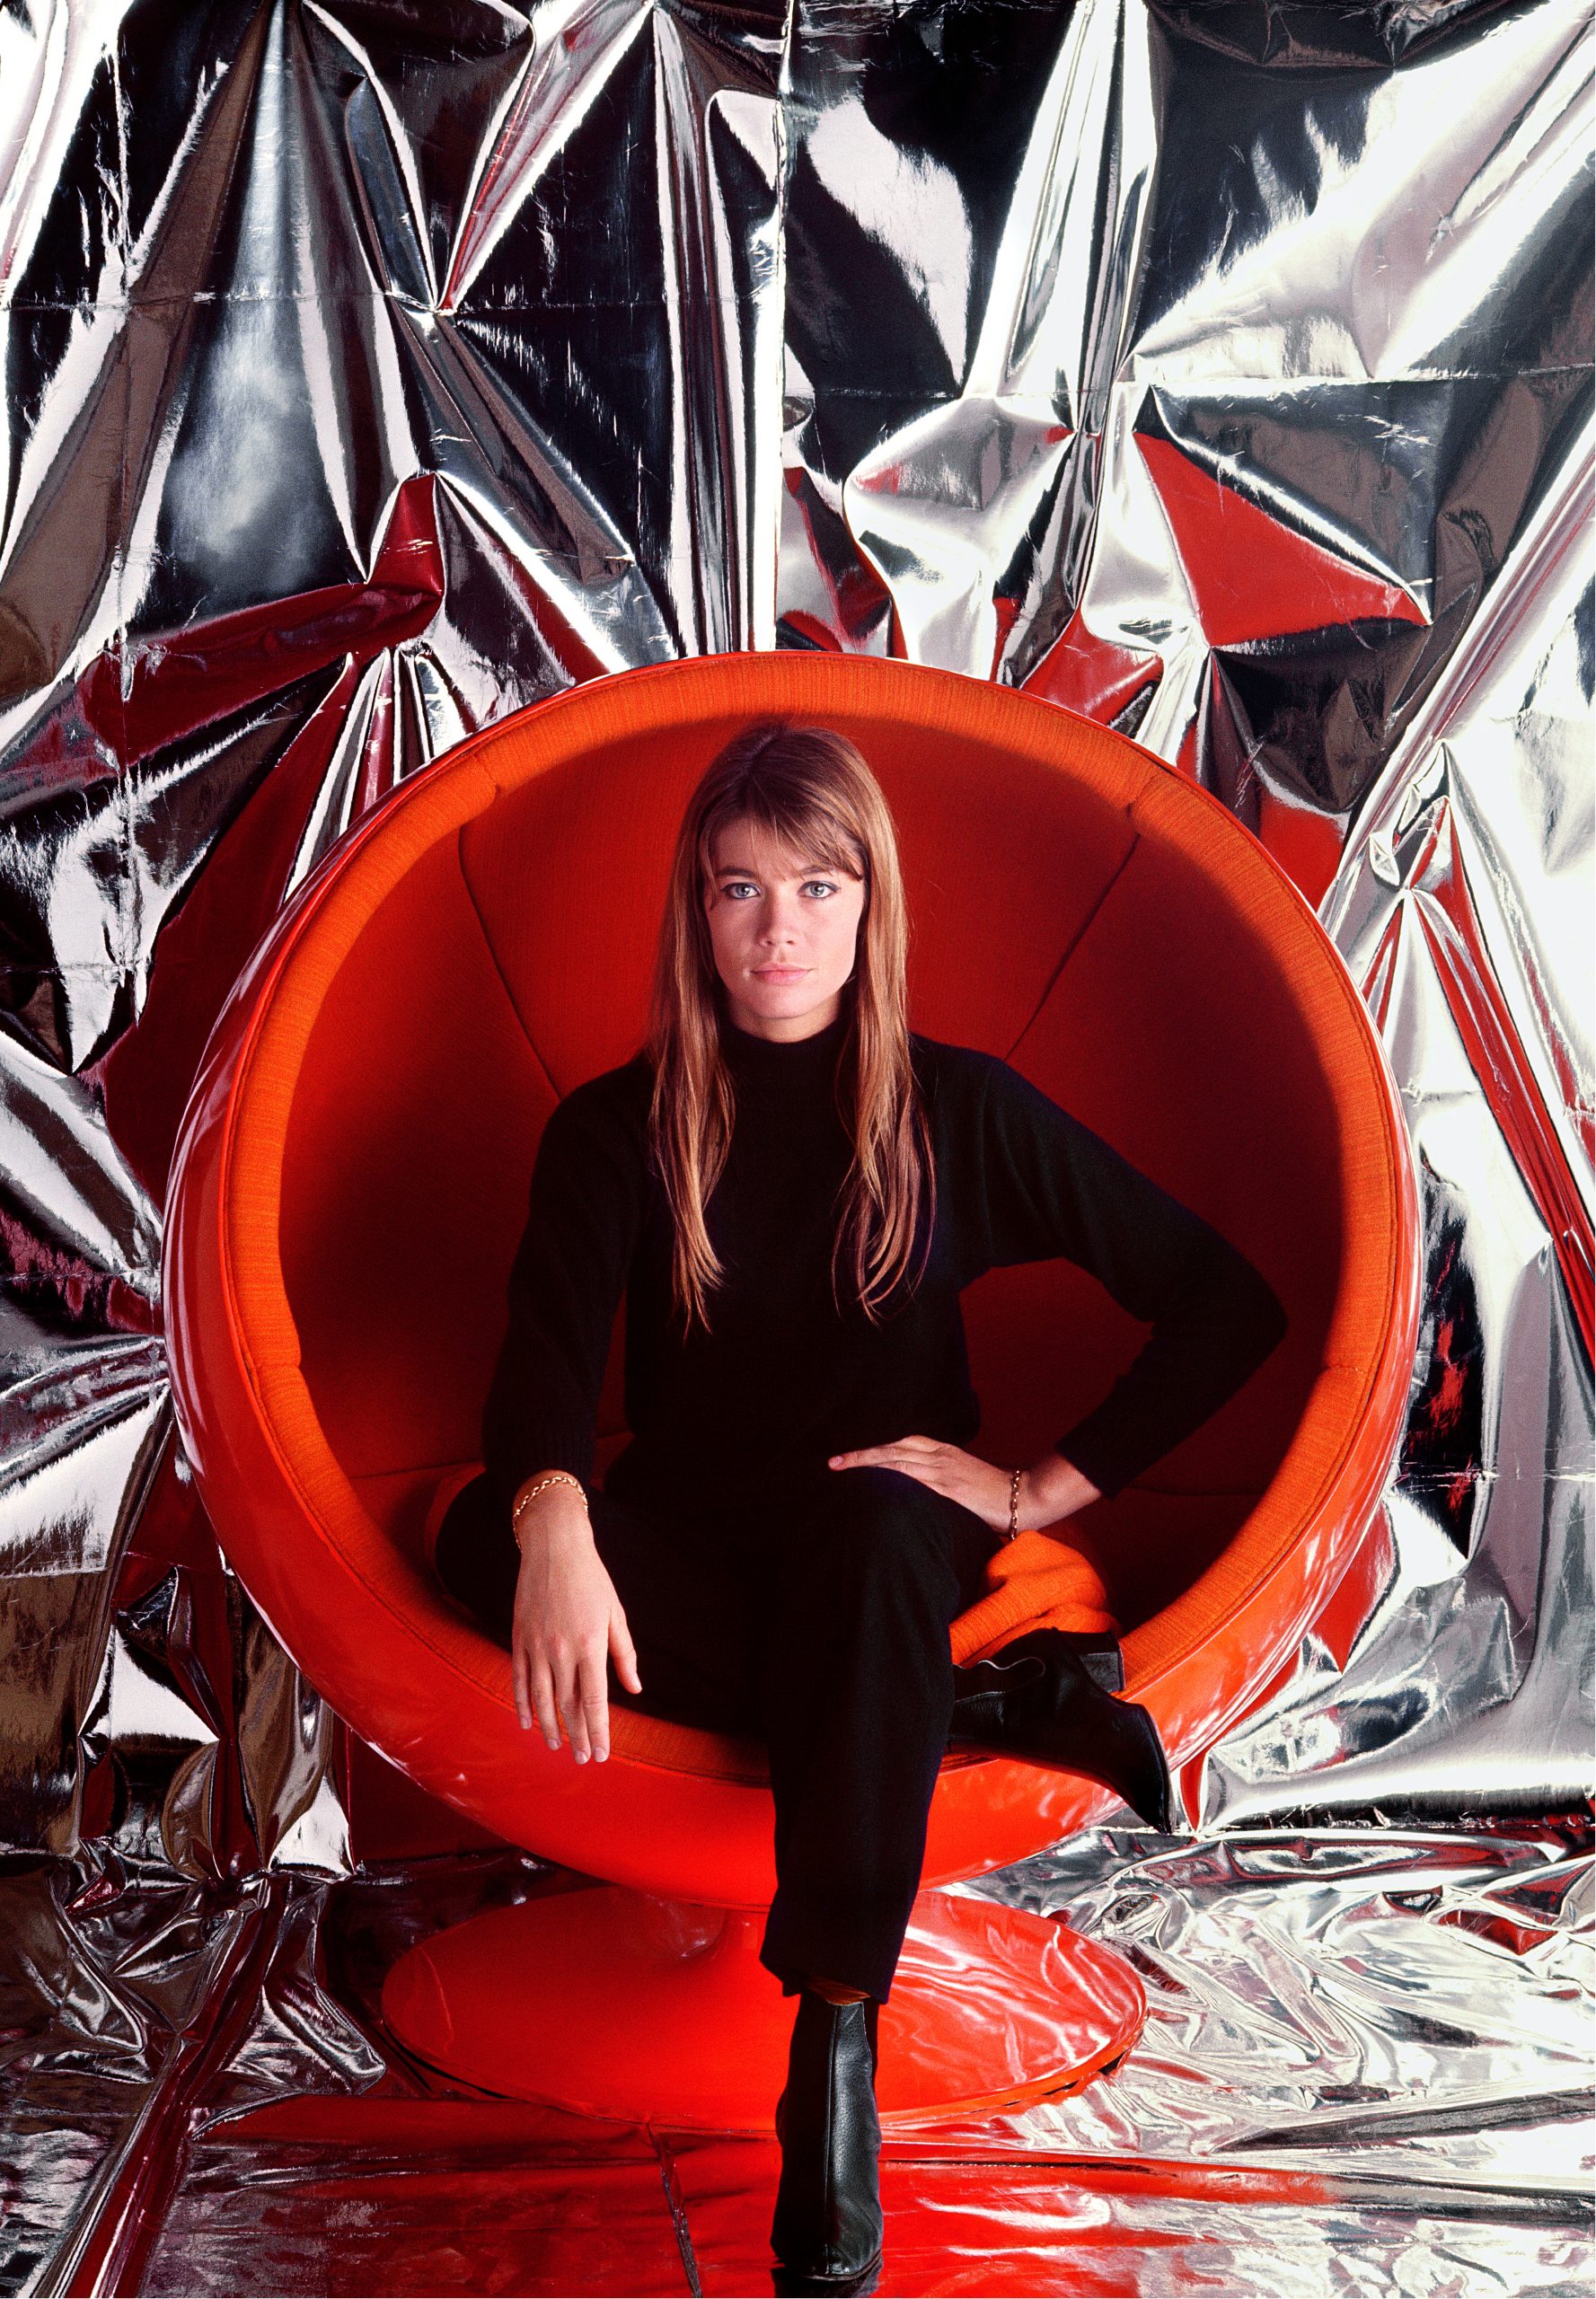 Françoise Hardy en sillón rojo. París, 1966 ©Jean-Marie Périer 2021